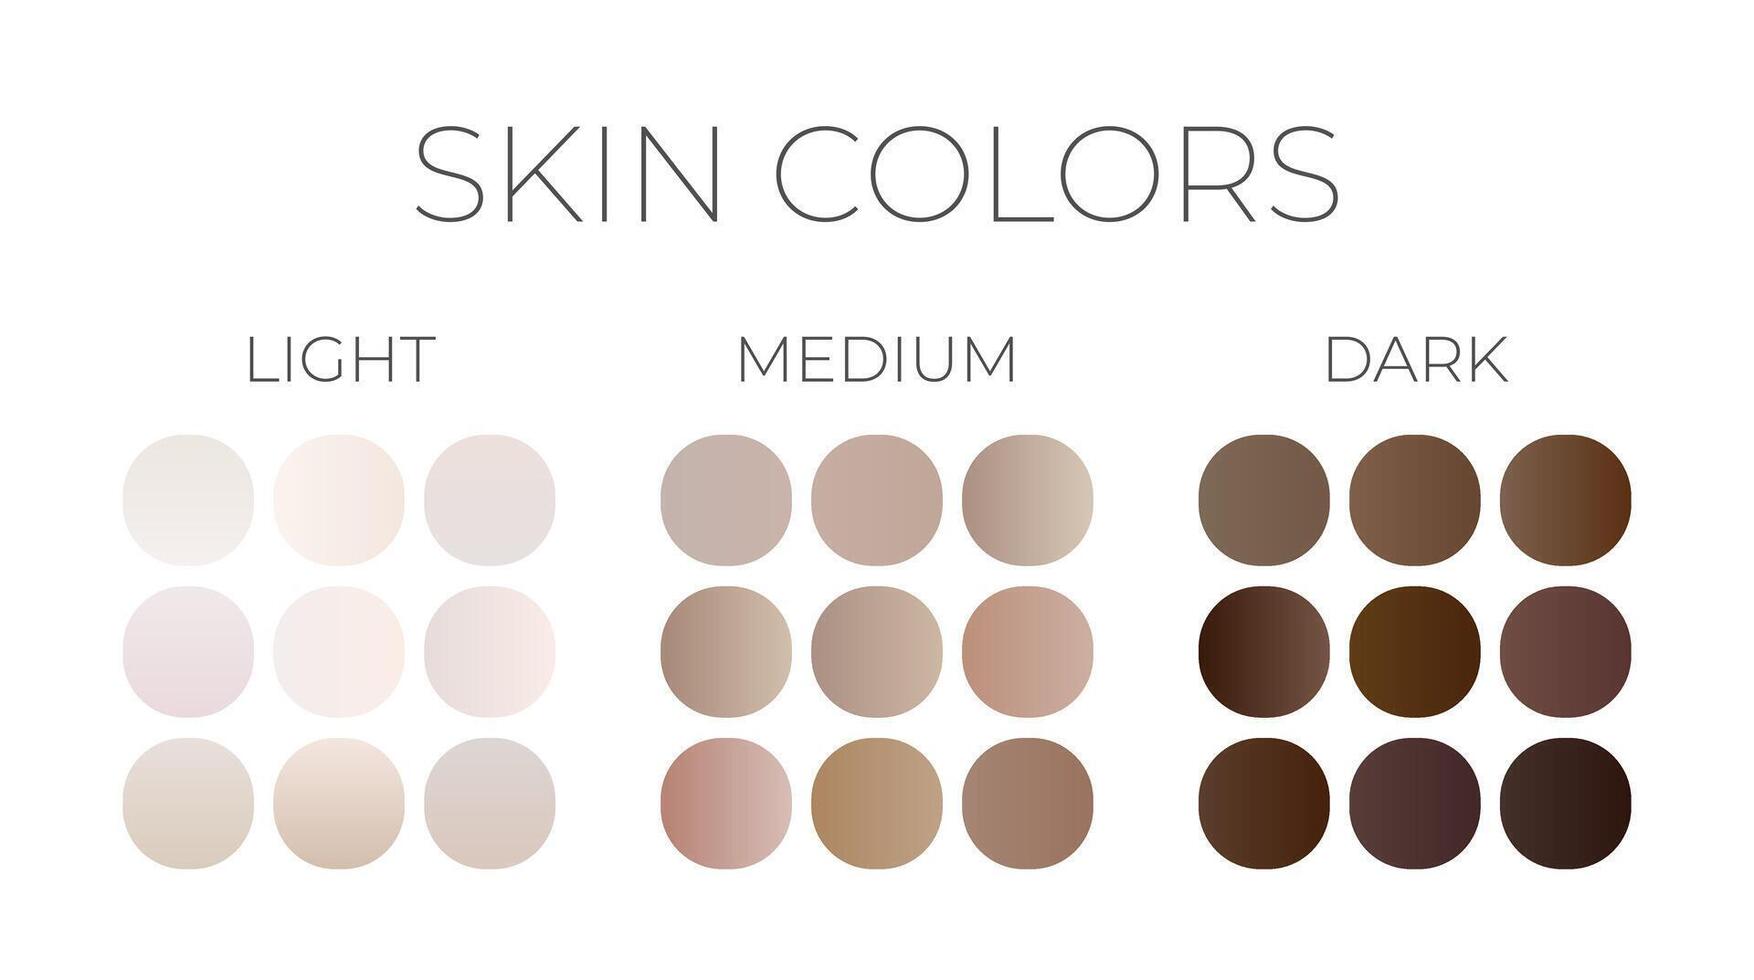 Skin Colors Light, Medium and Dark Swatches Gradients vector